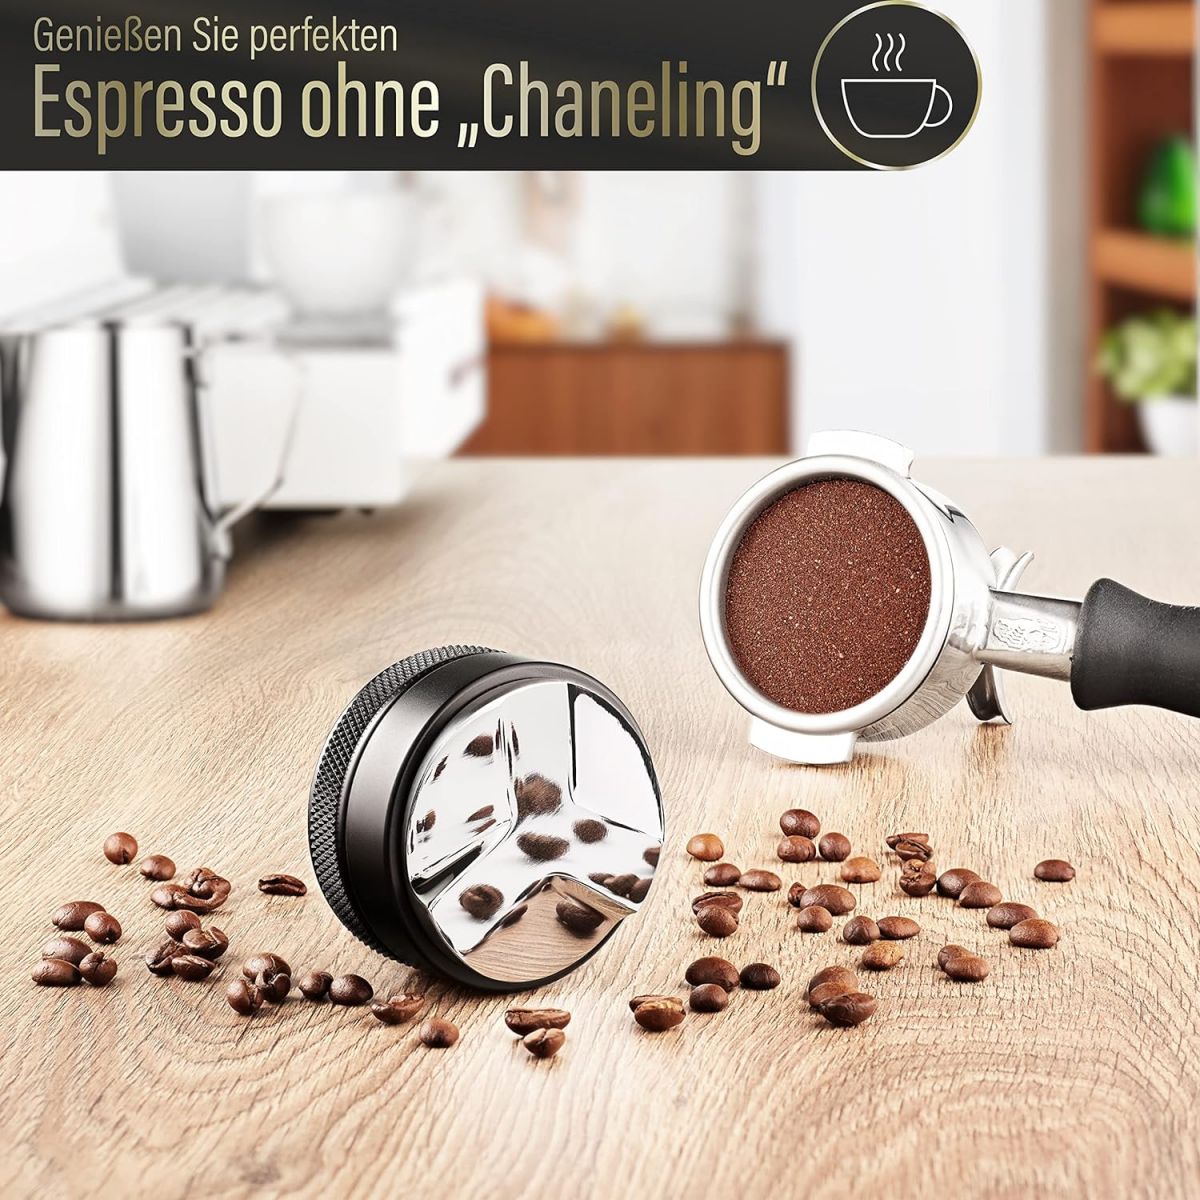 Espresso Distributor 51 mm for Perfect Results